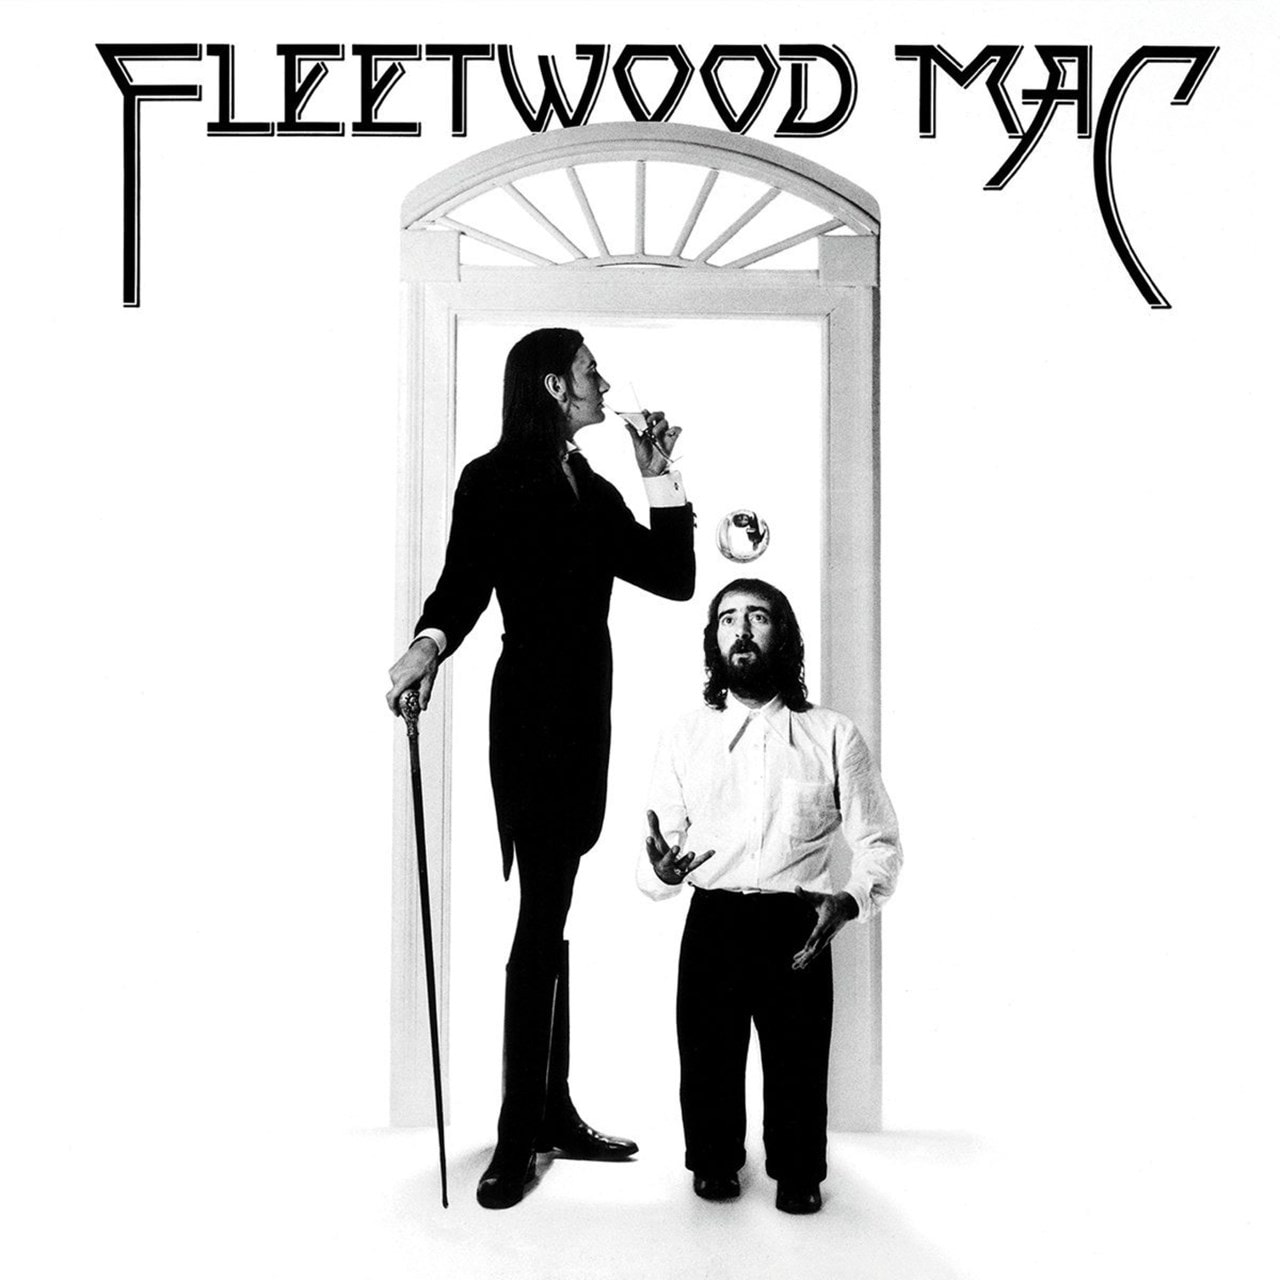 fleetwood mac full album free download